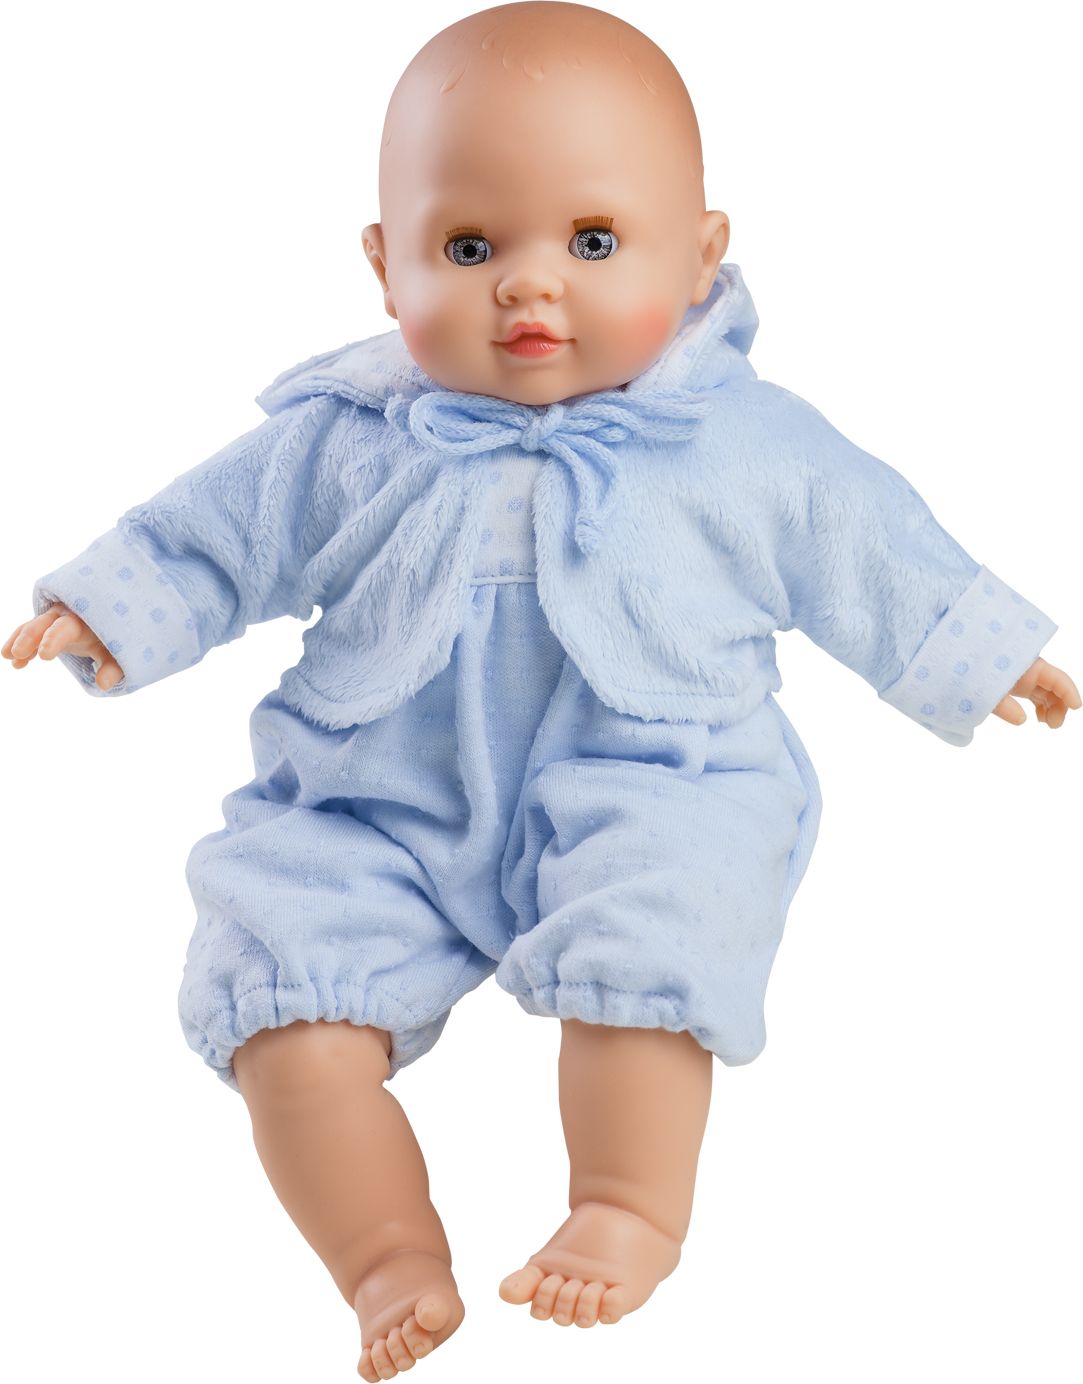 Realistické miminko - chlapeček Julius od firmy Paola Reina - obrázek 1